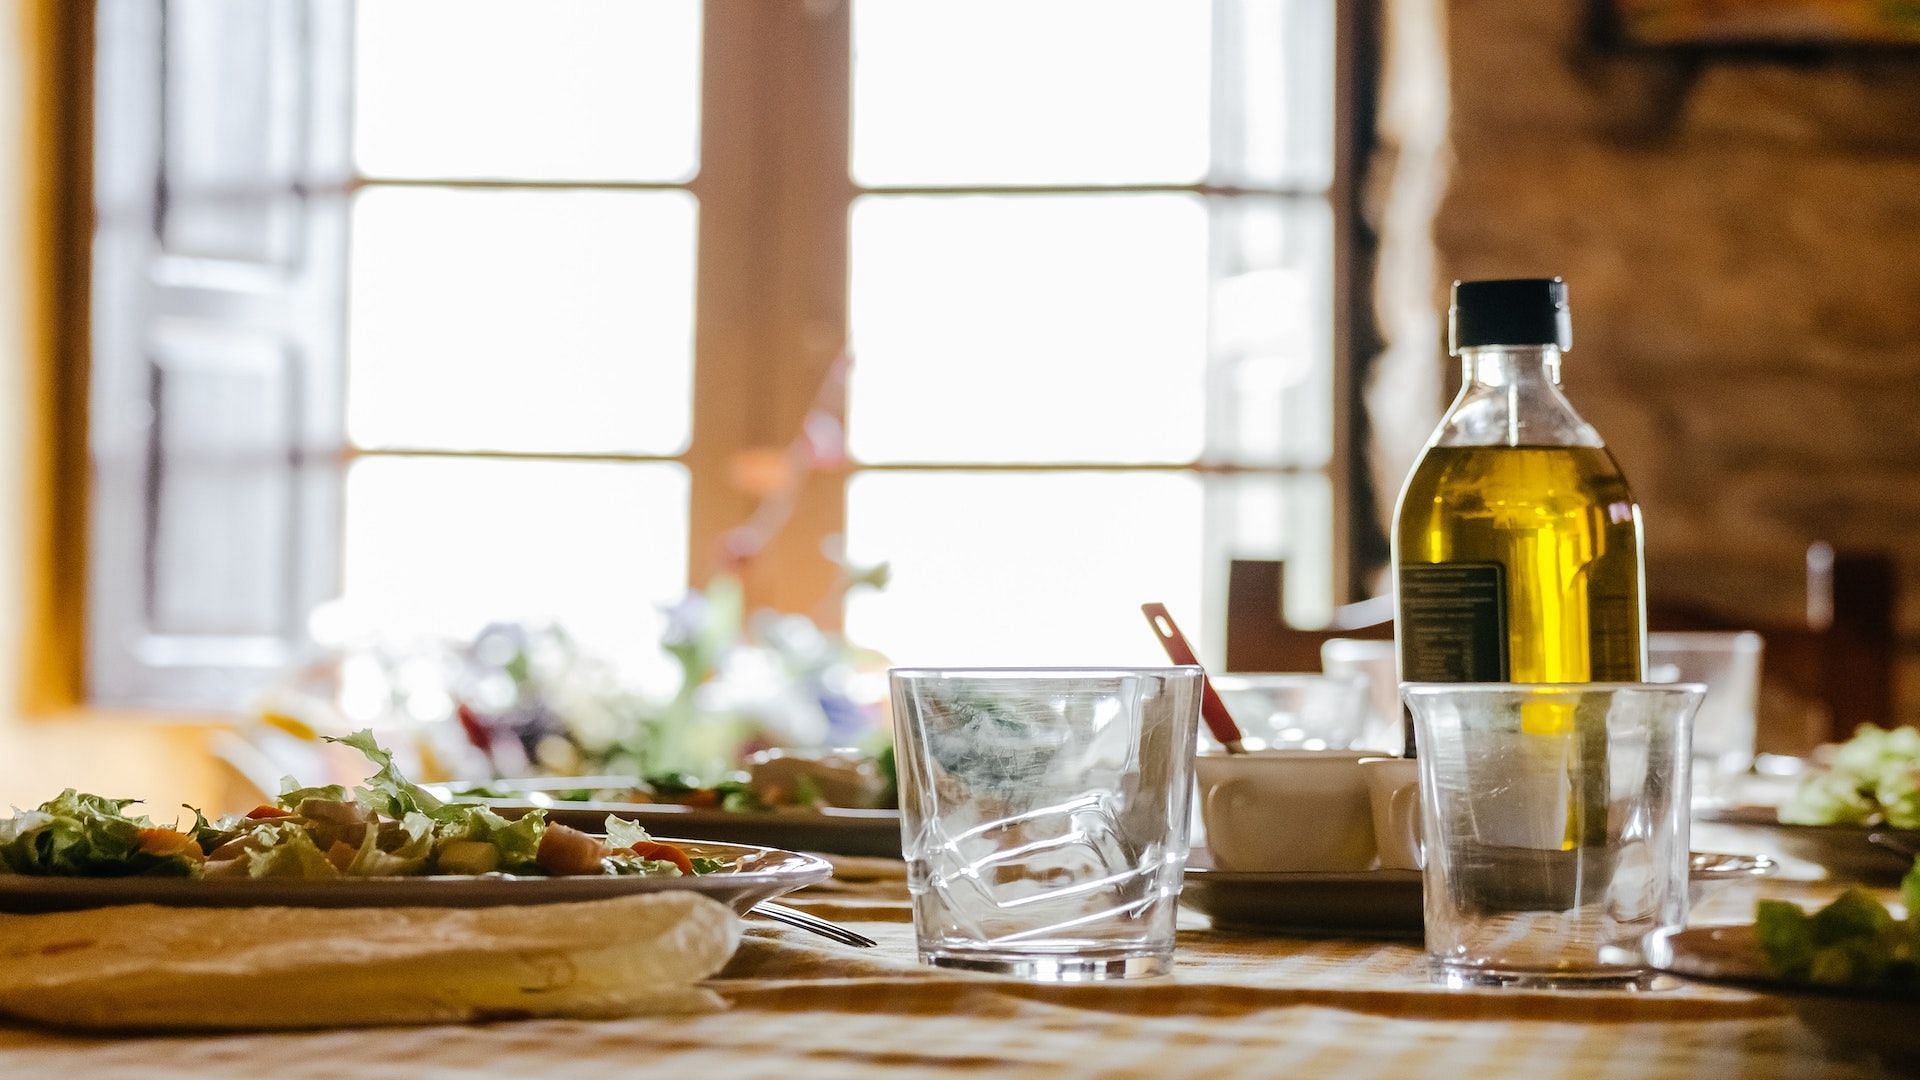 Drizzling food in olive oil makes it richer. Image via Unsplash/Juan Gomez